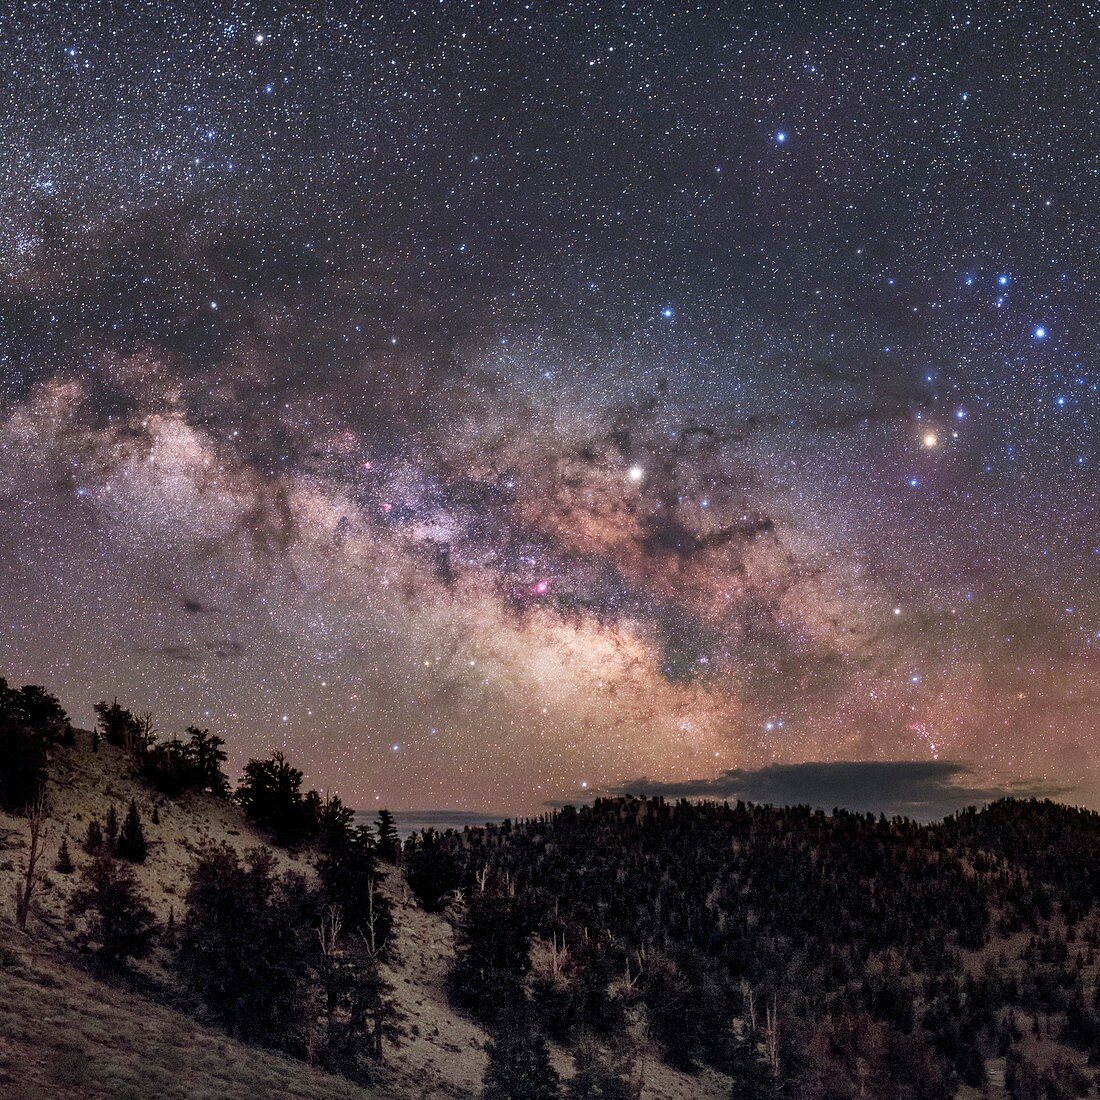 Milky Way over pine trees, California, USA